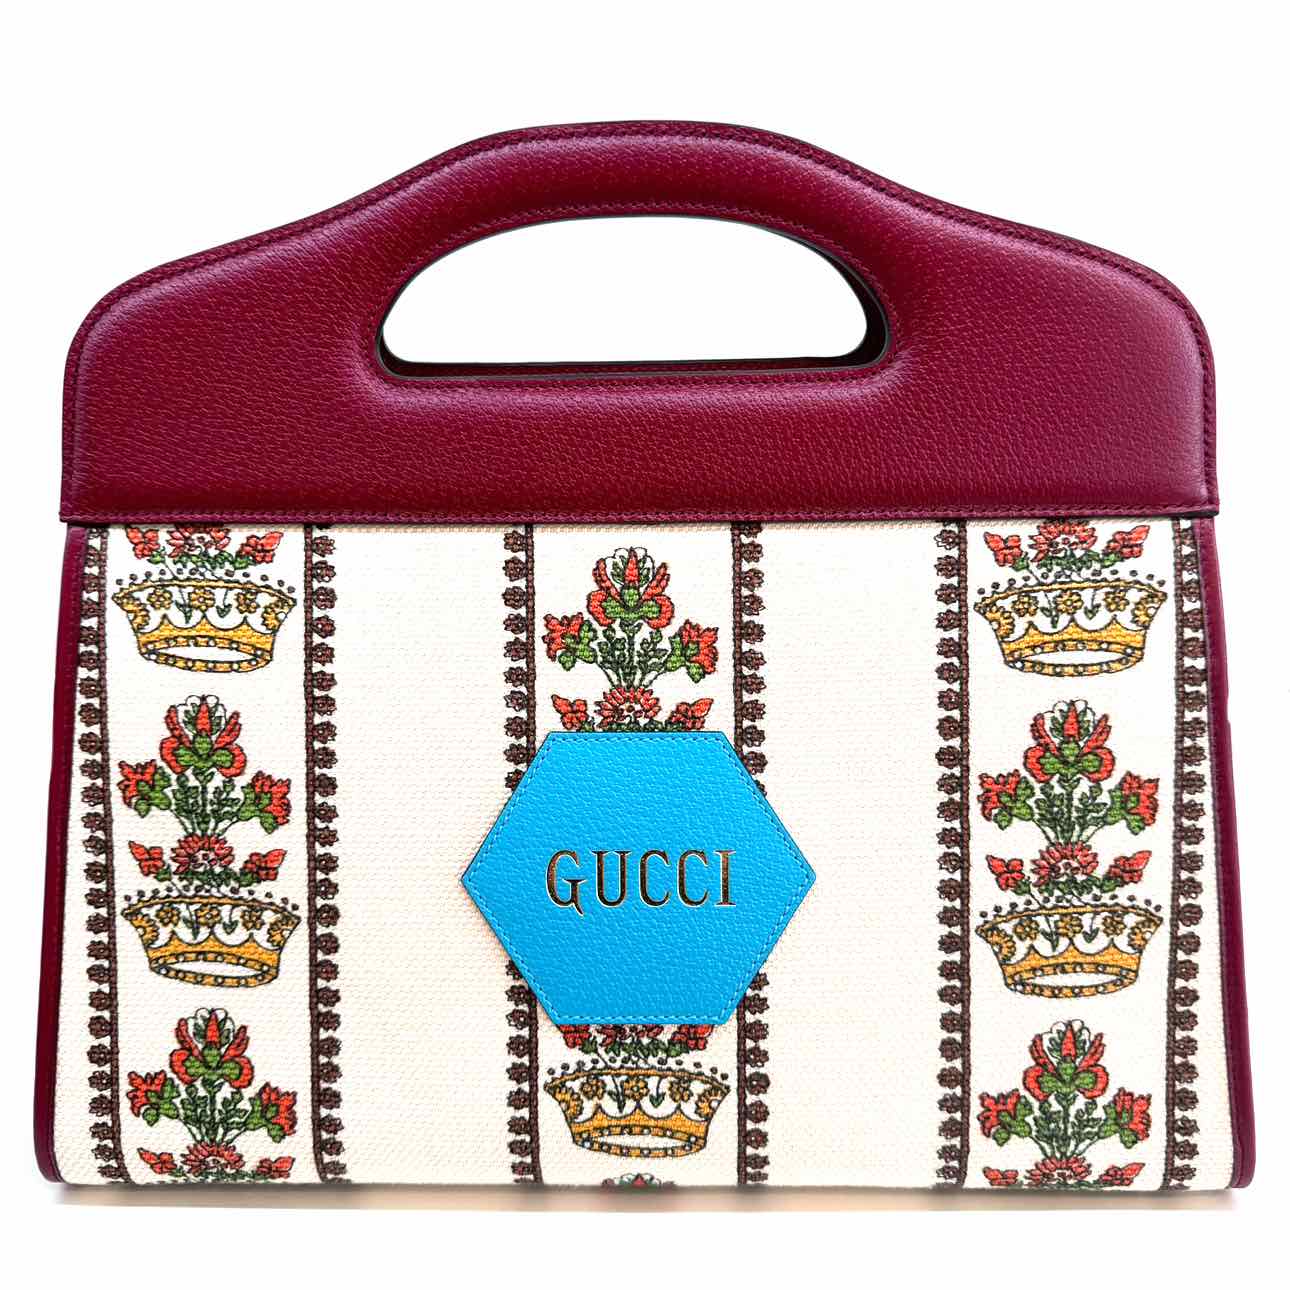 New Arrival - GUCCI 100 Years Anniversary Crown Handbag